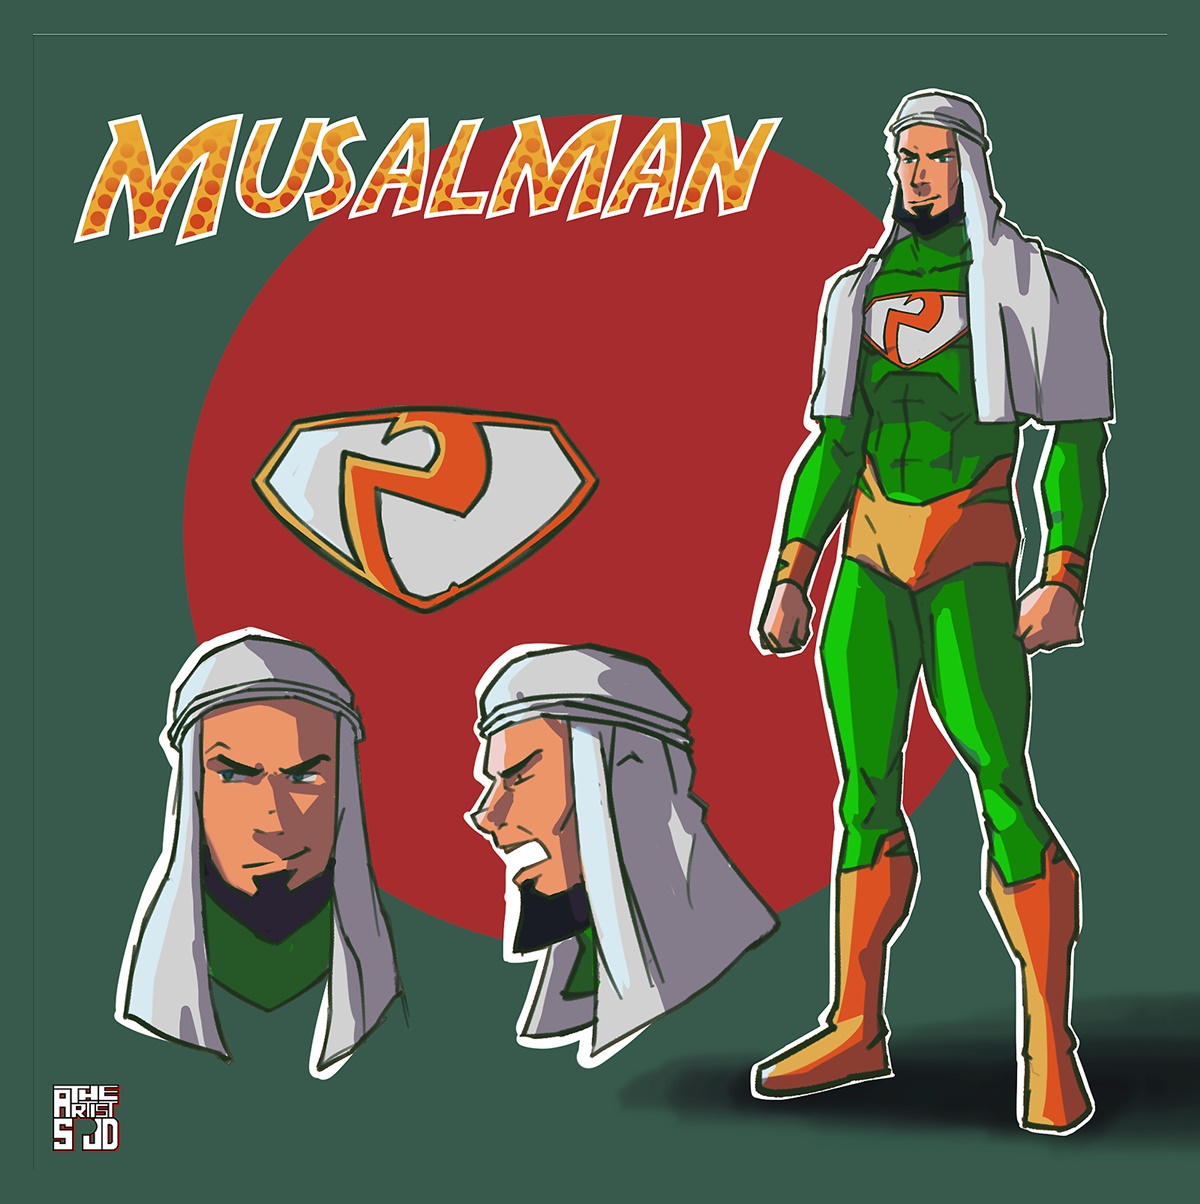 Musalman, a Muslim superhero